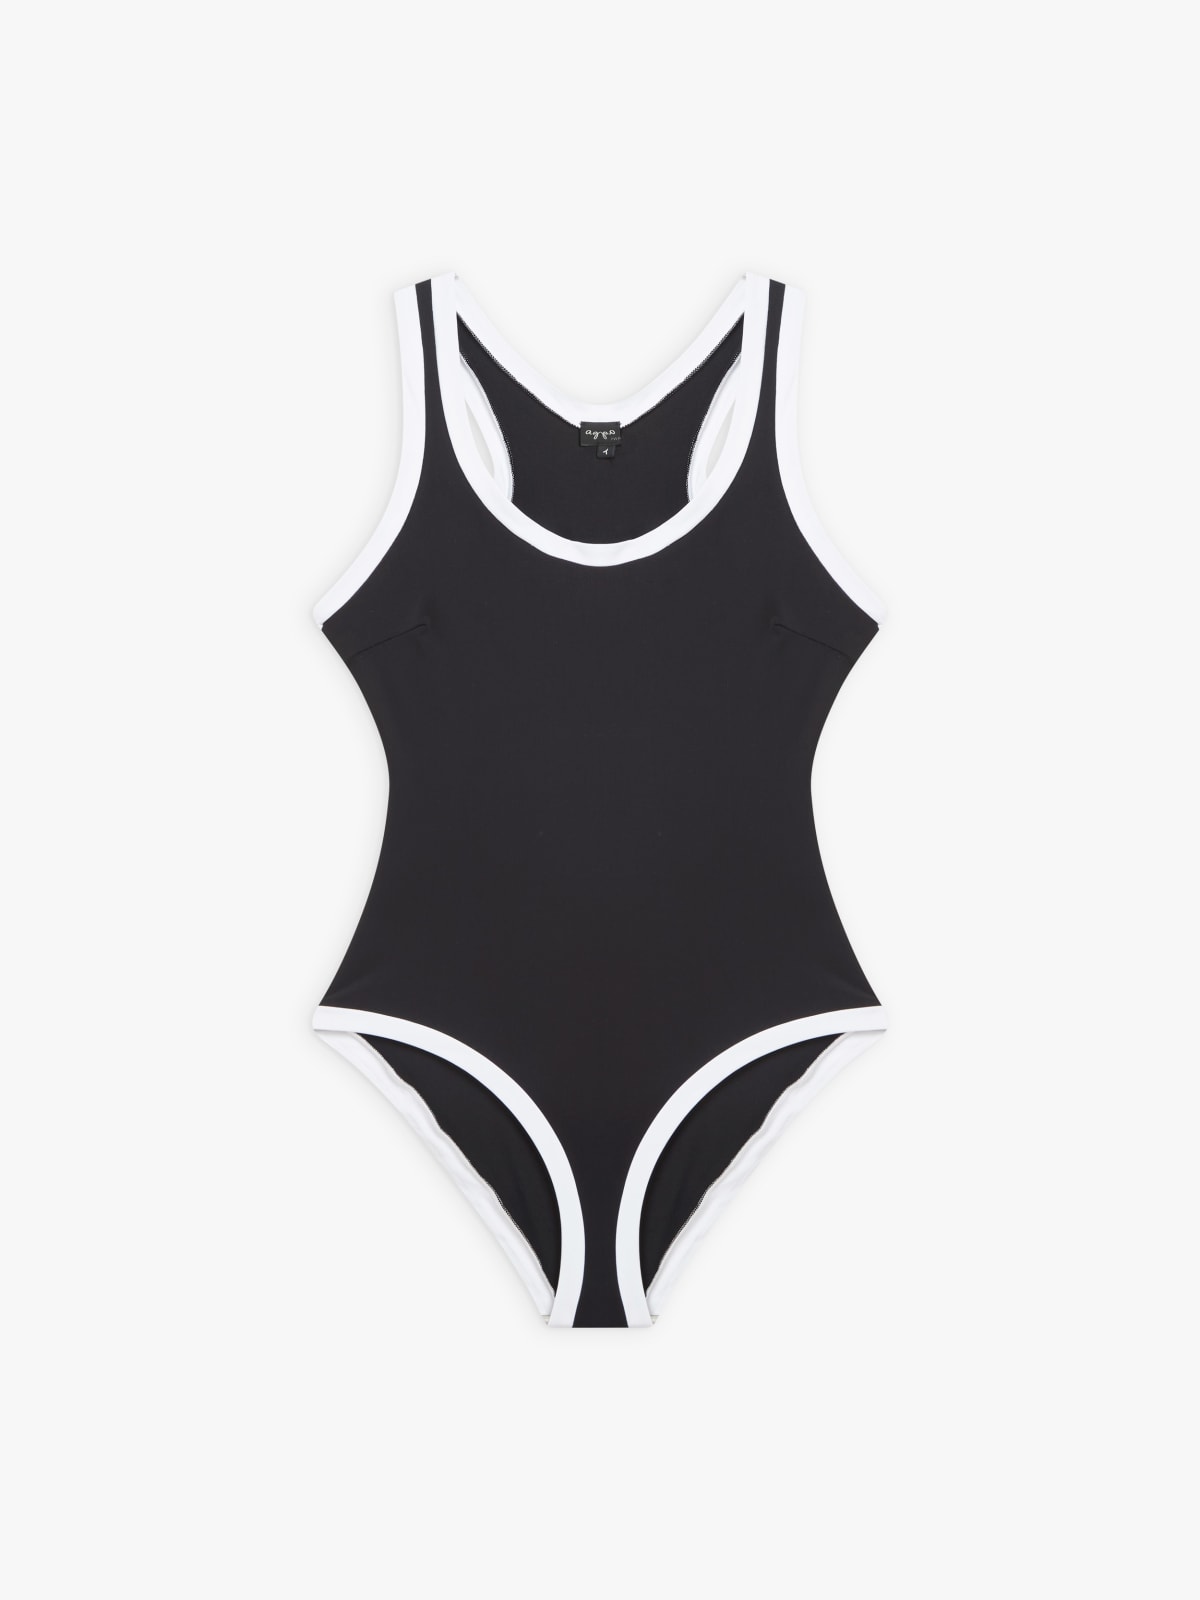 black one-piece Marcel swimsuit